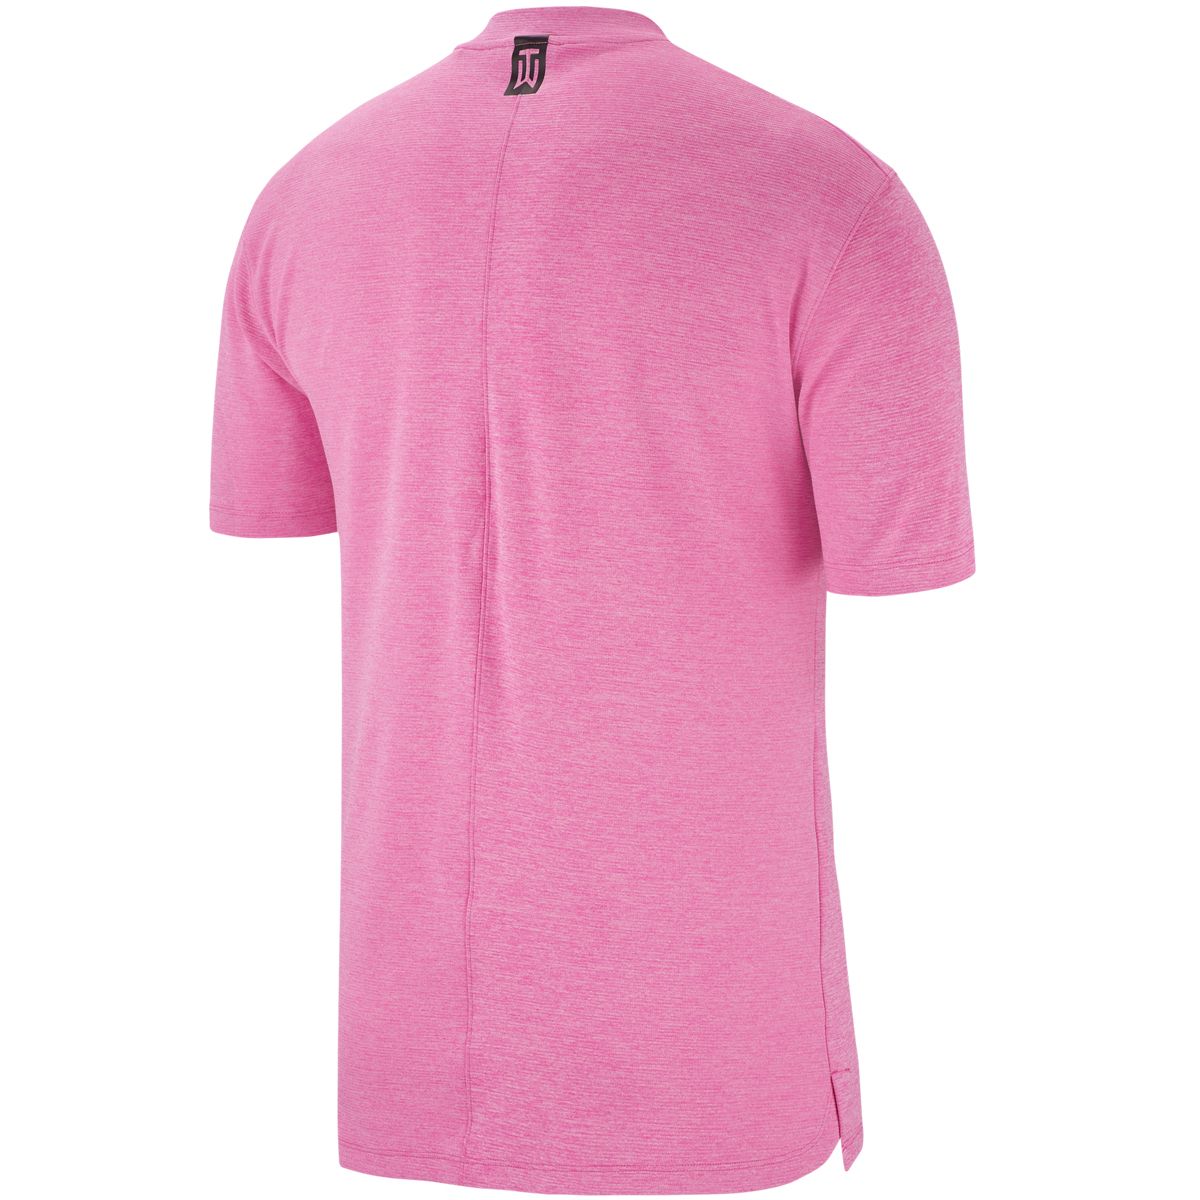 tiger woods pink shirt